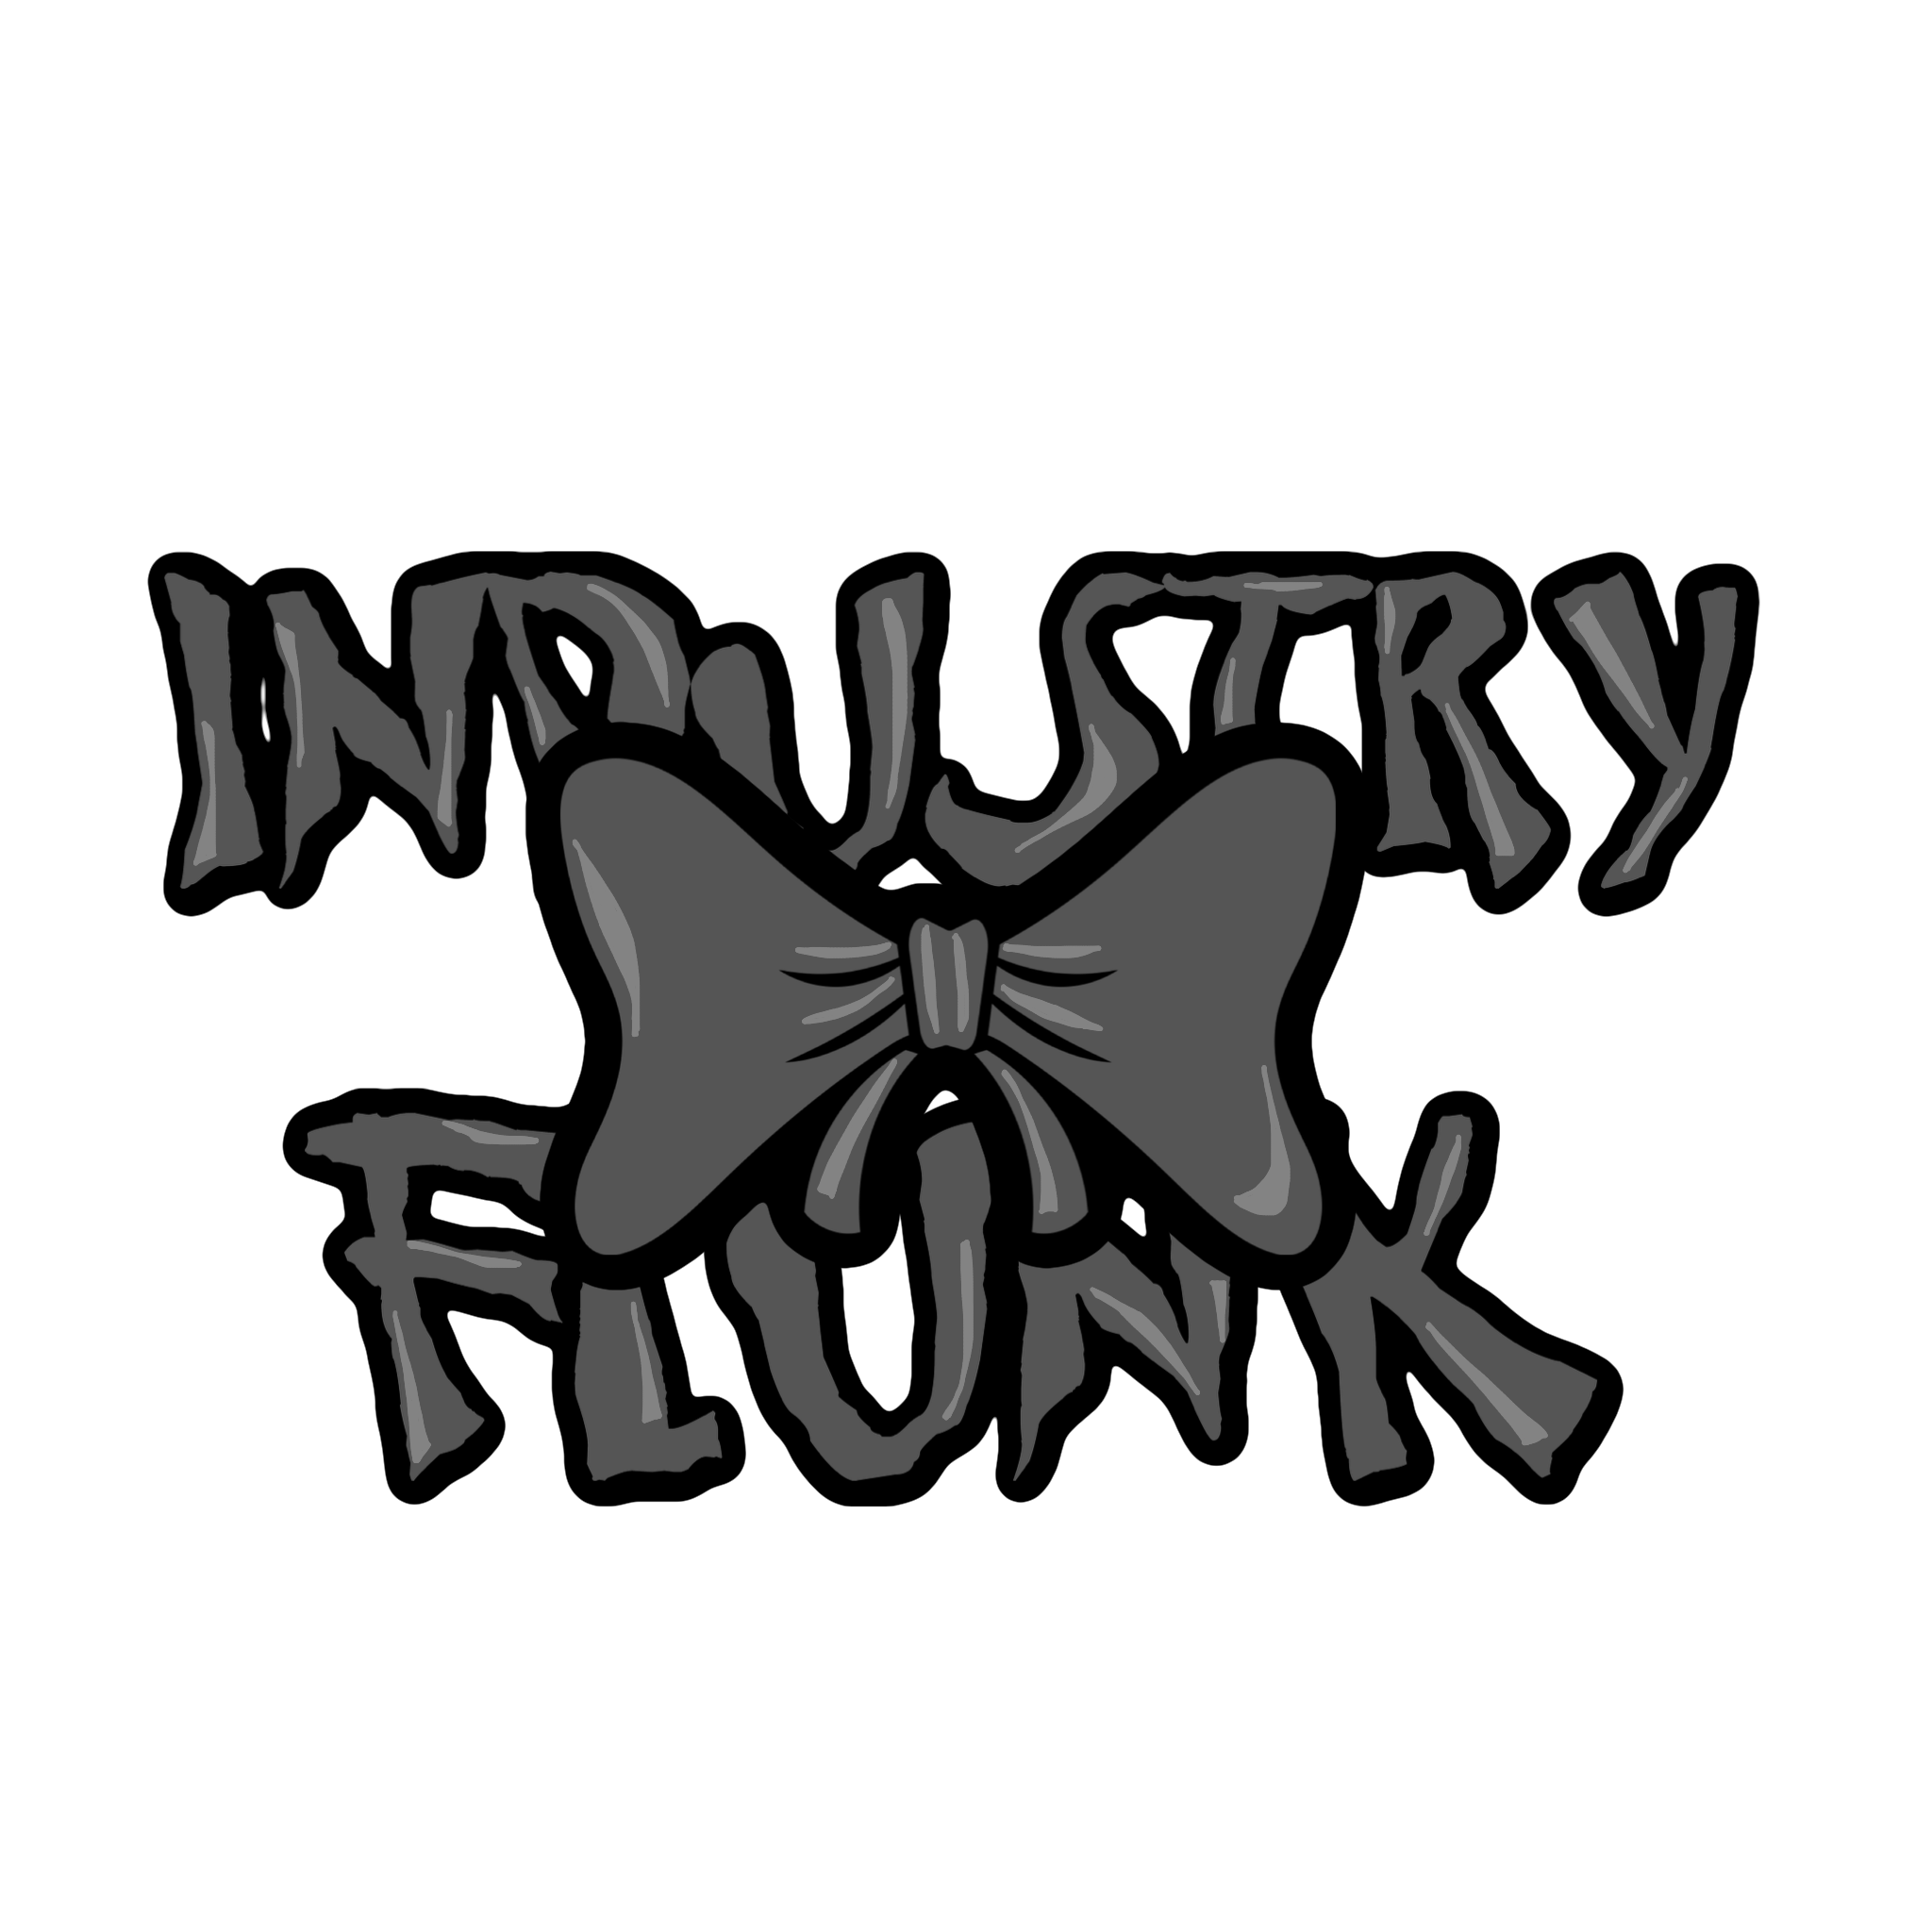 Industry Flunk